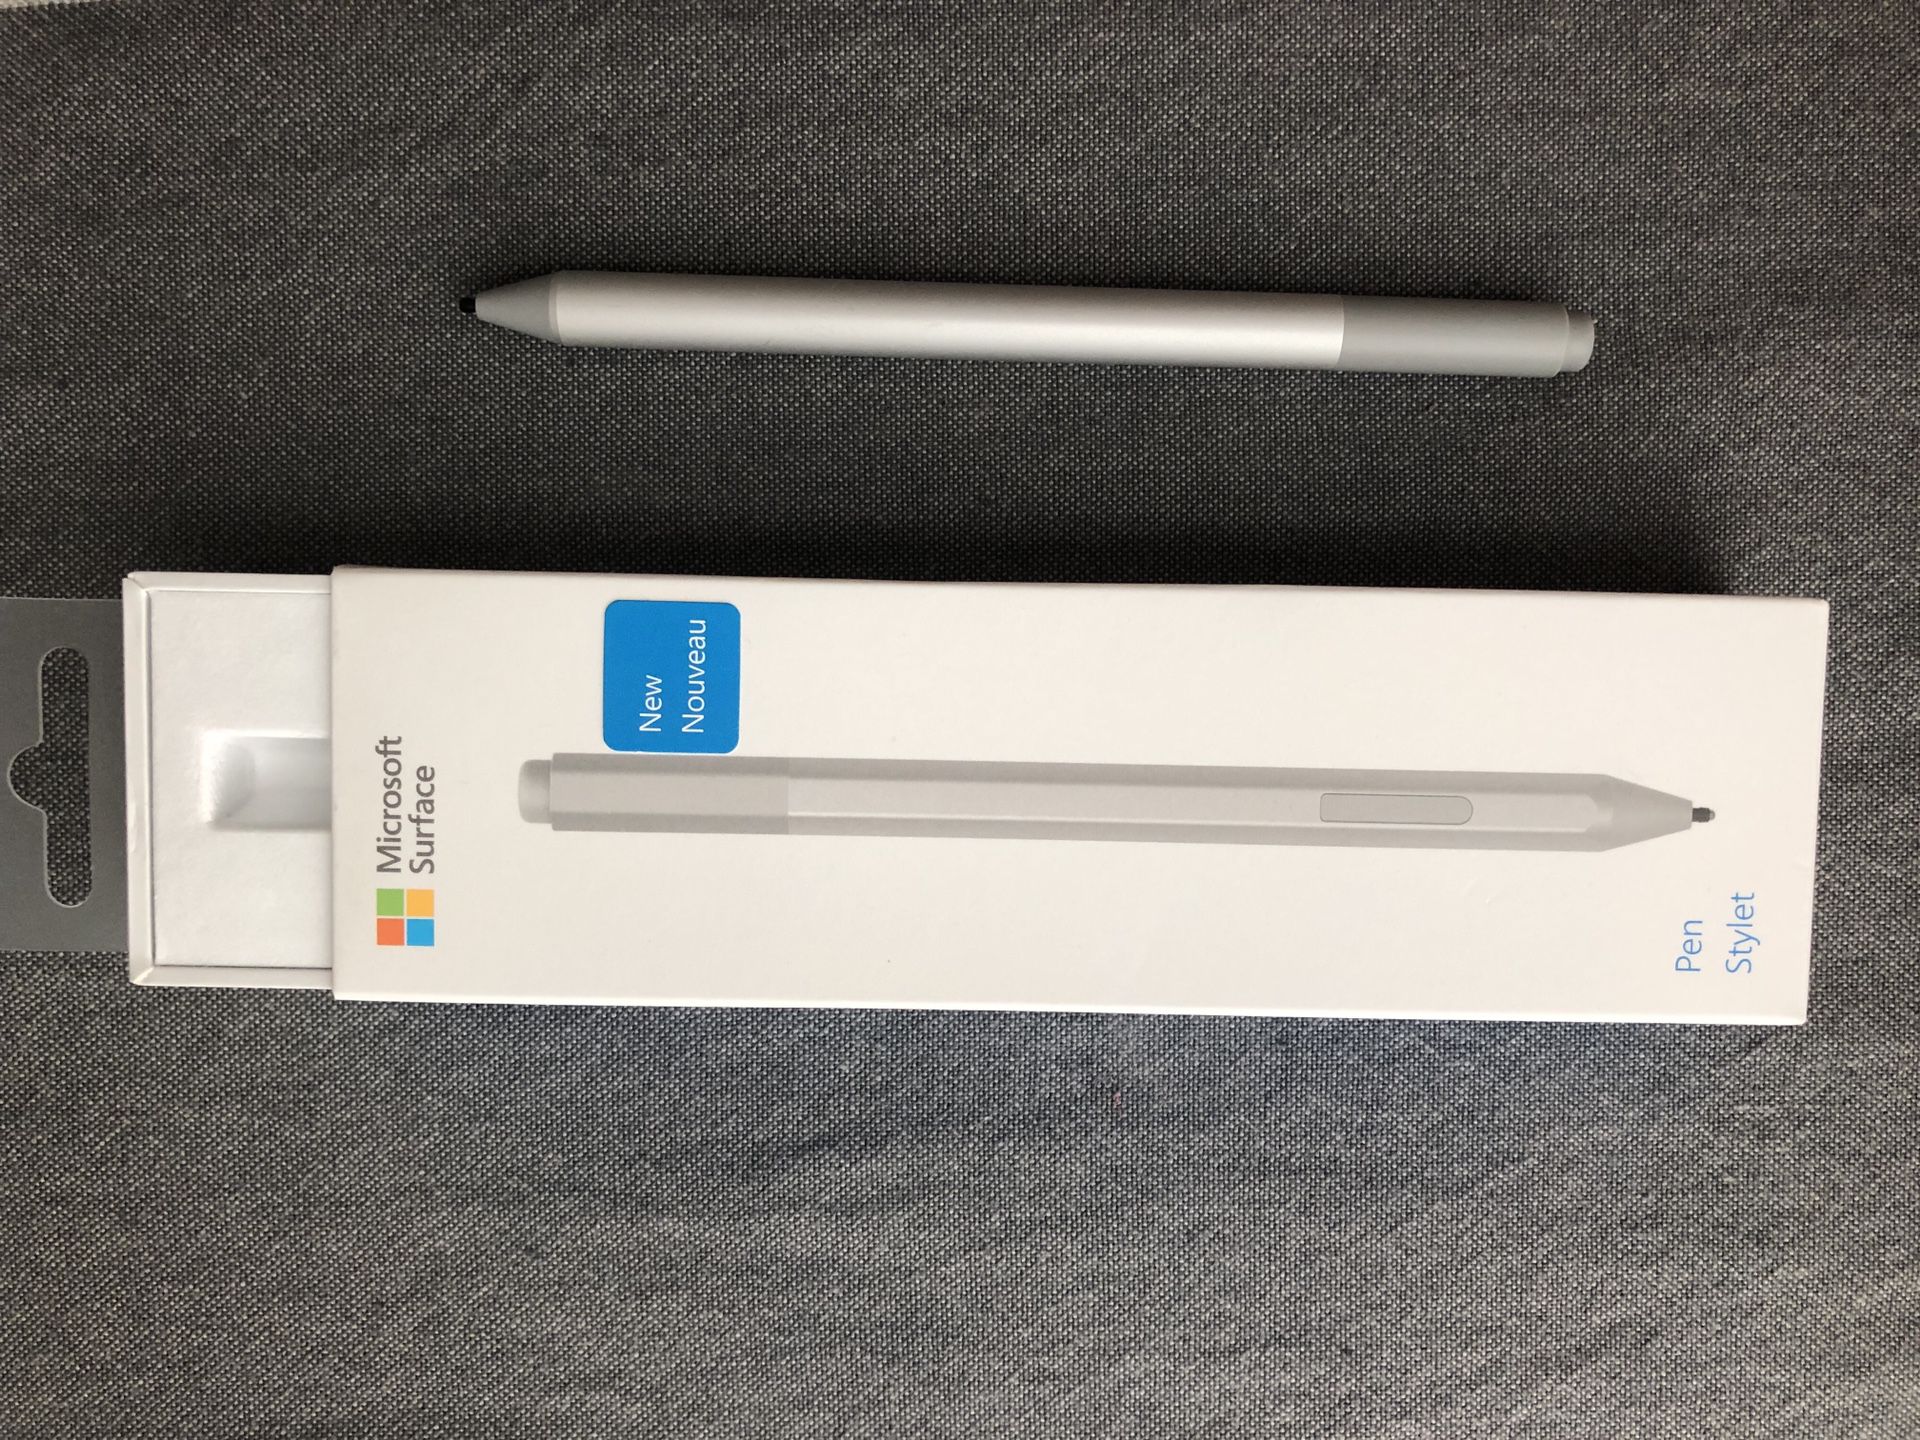 NWOT Microsoft Surface Pen in Platinum